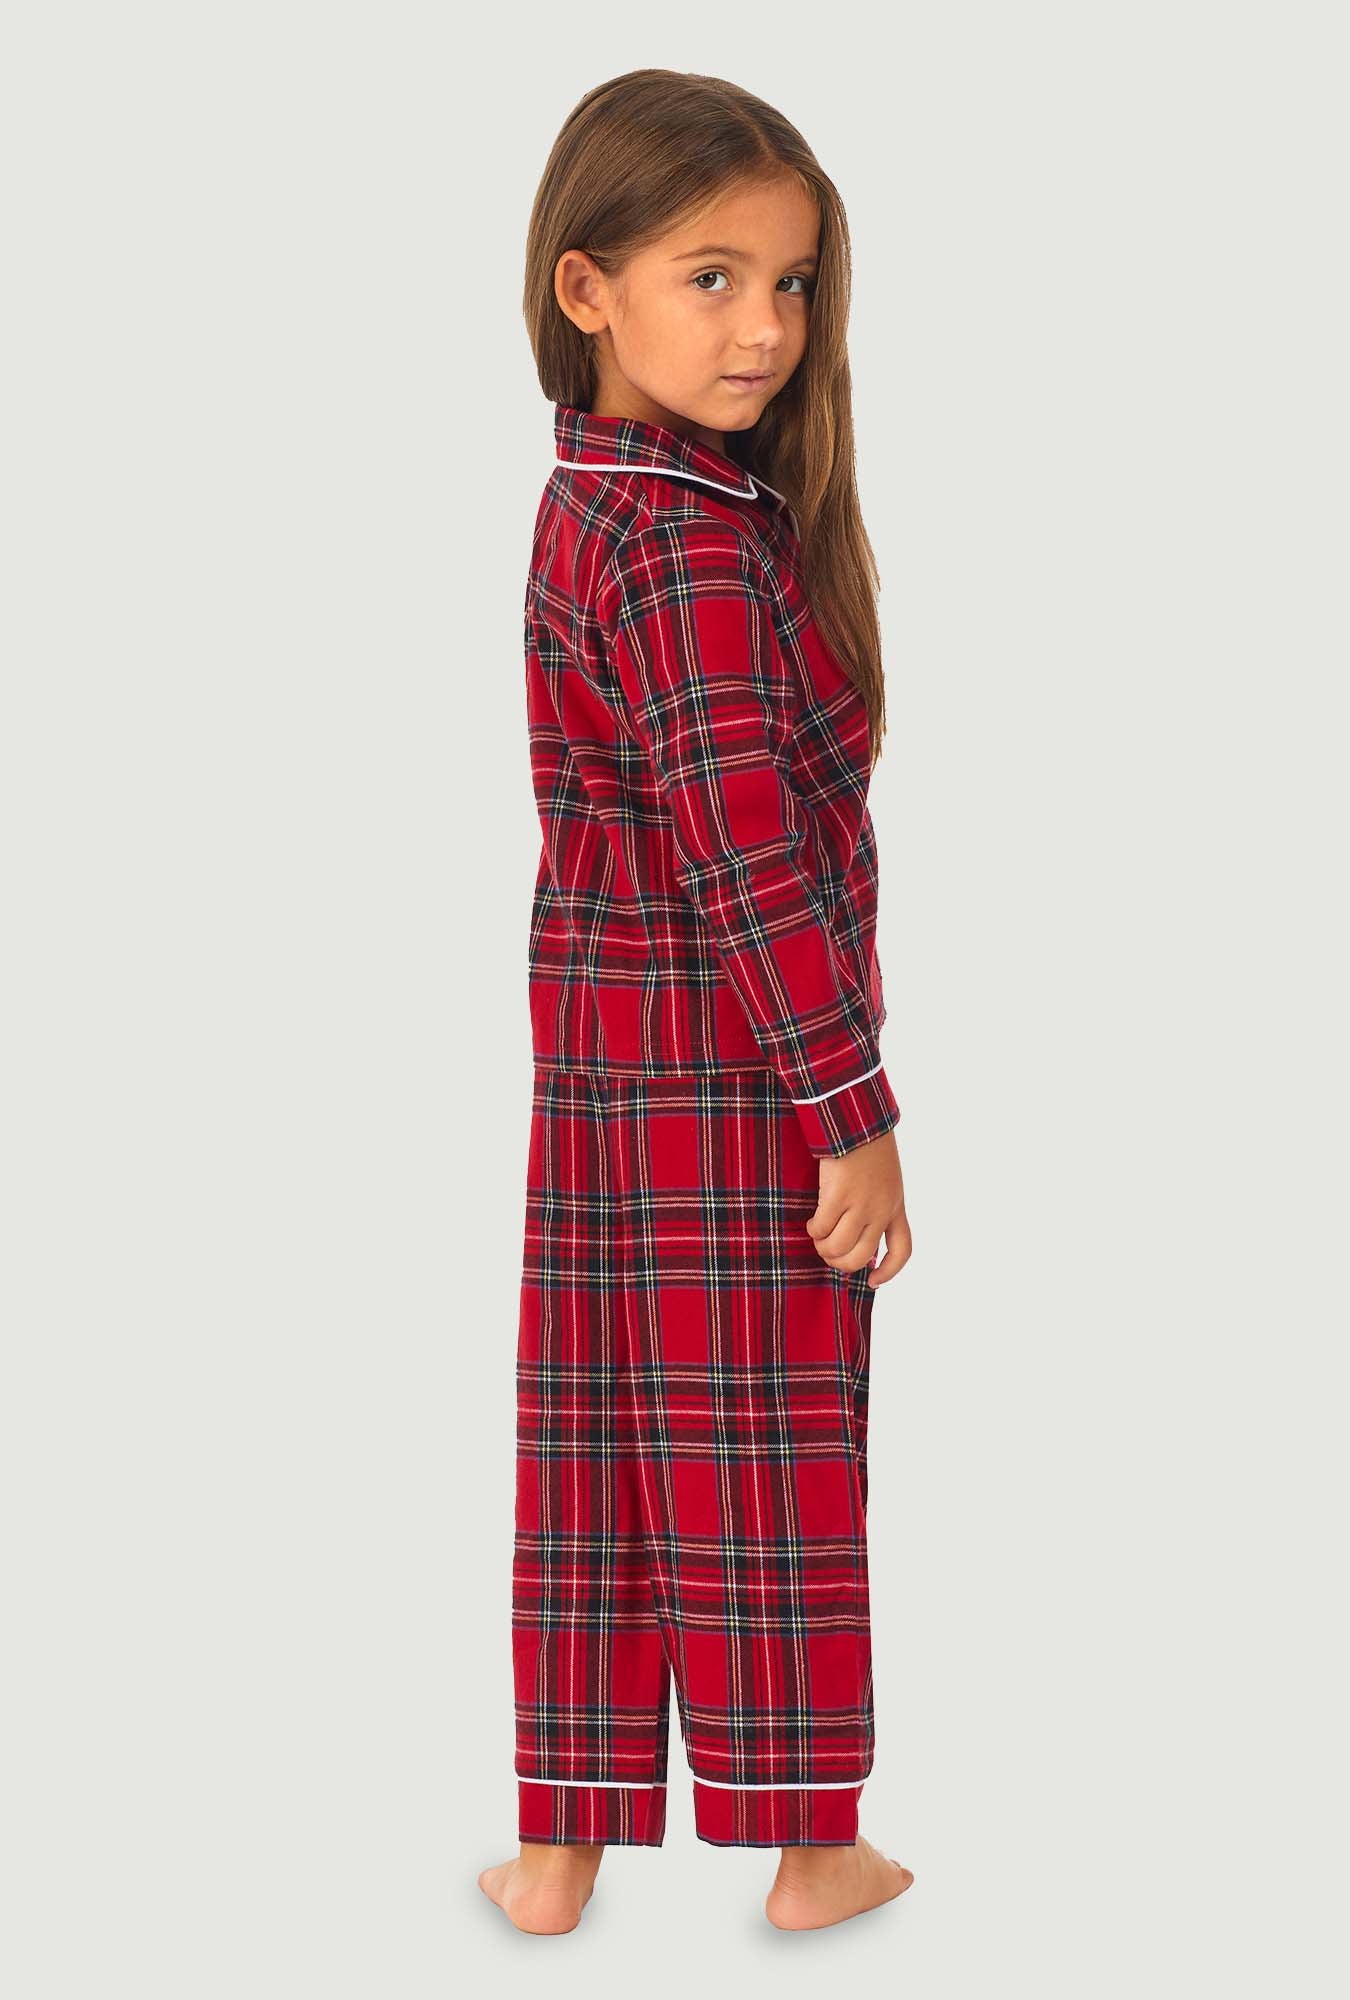 A girl wearing a red tartan long sleeve pajama set.